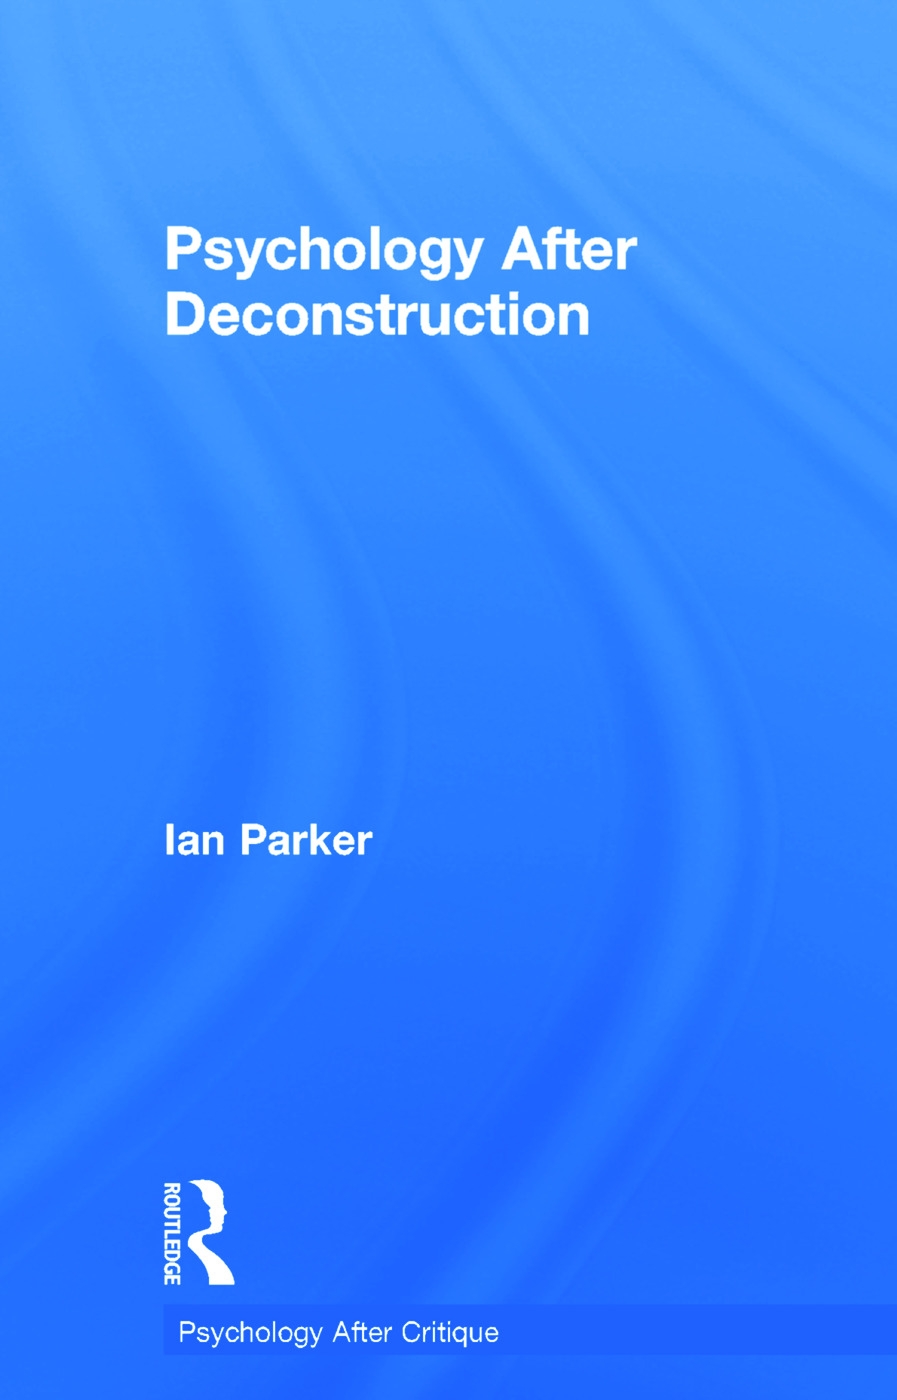 Psychology After Deconstruction: Erasure and Social Reconstruction